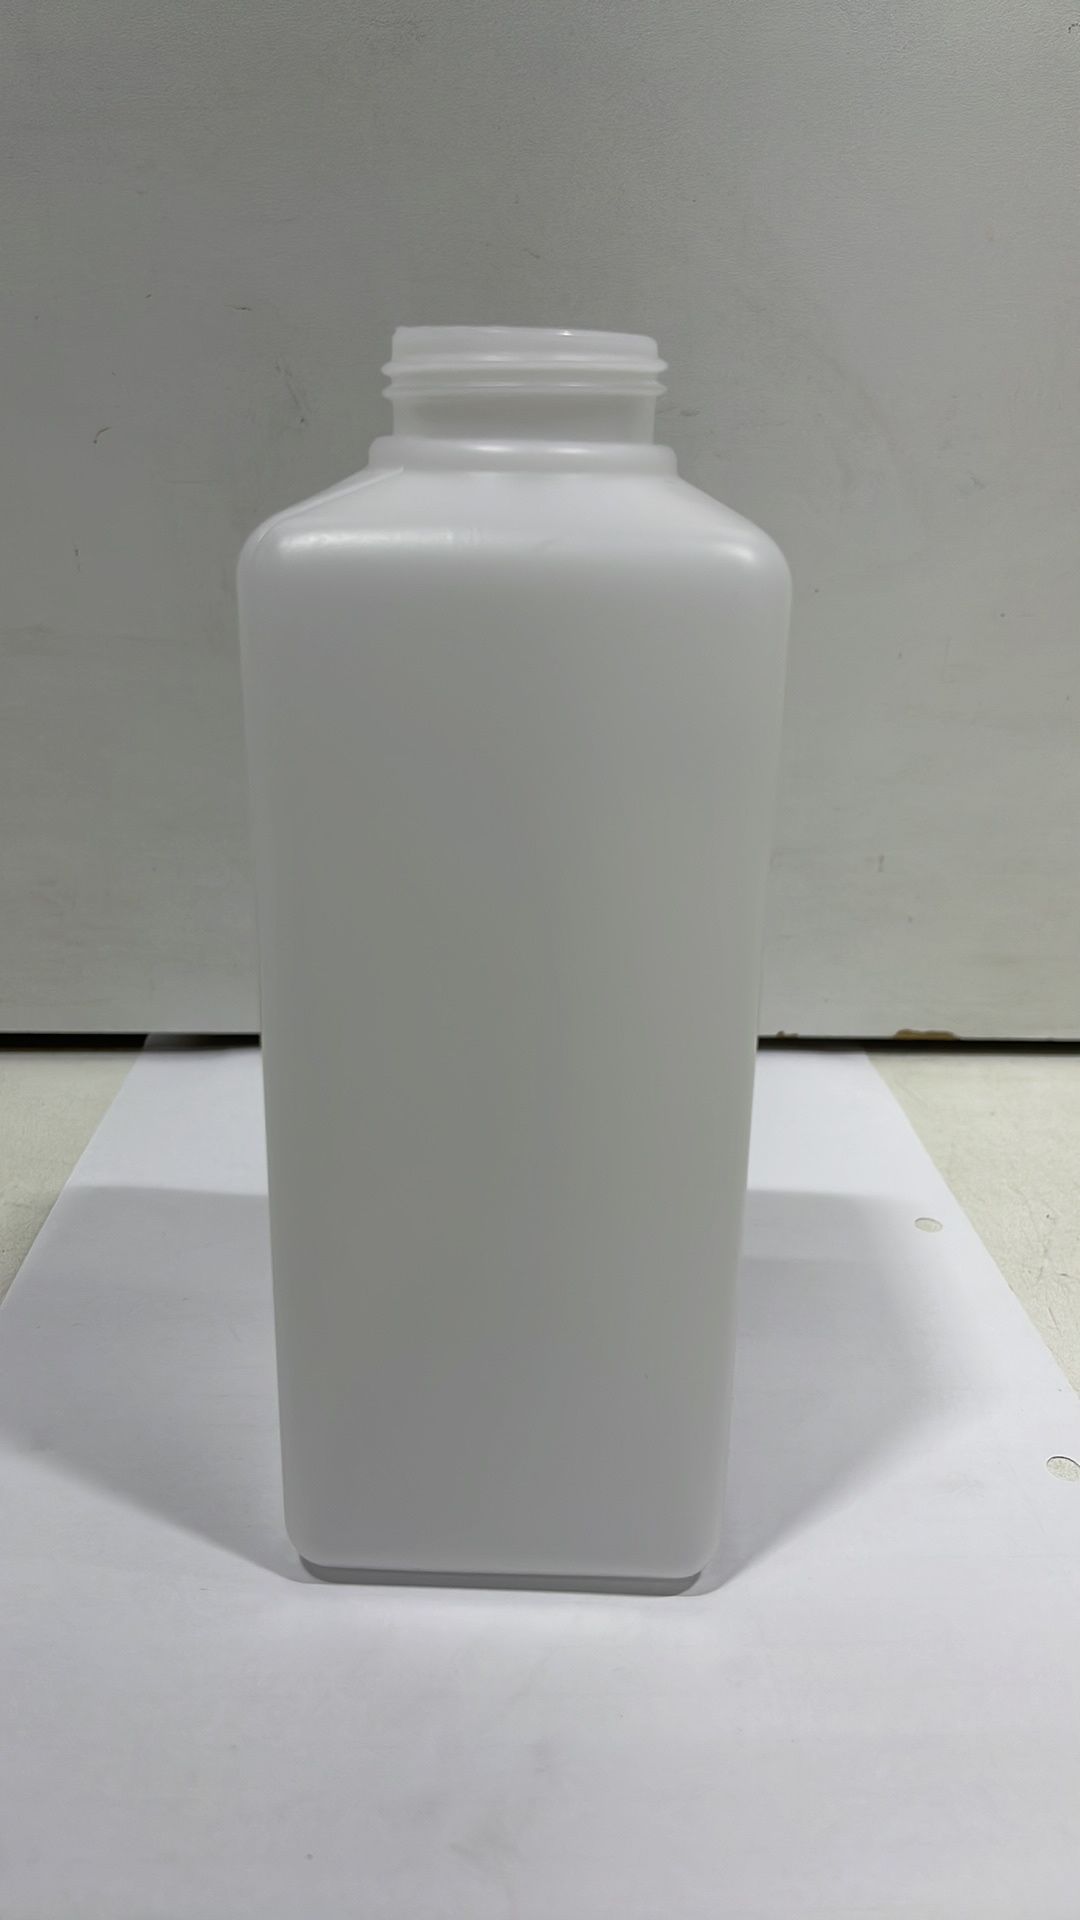 1 x Pallet x 24 Boxes x 108 Per Box | White PE Plastic Bottles | Size: 16 x 7cm Square Bottles - Image 3 of 3